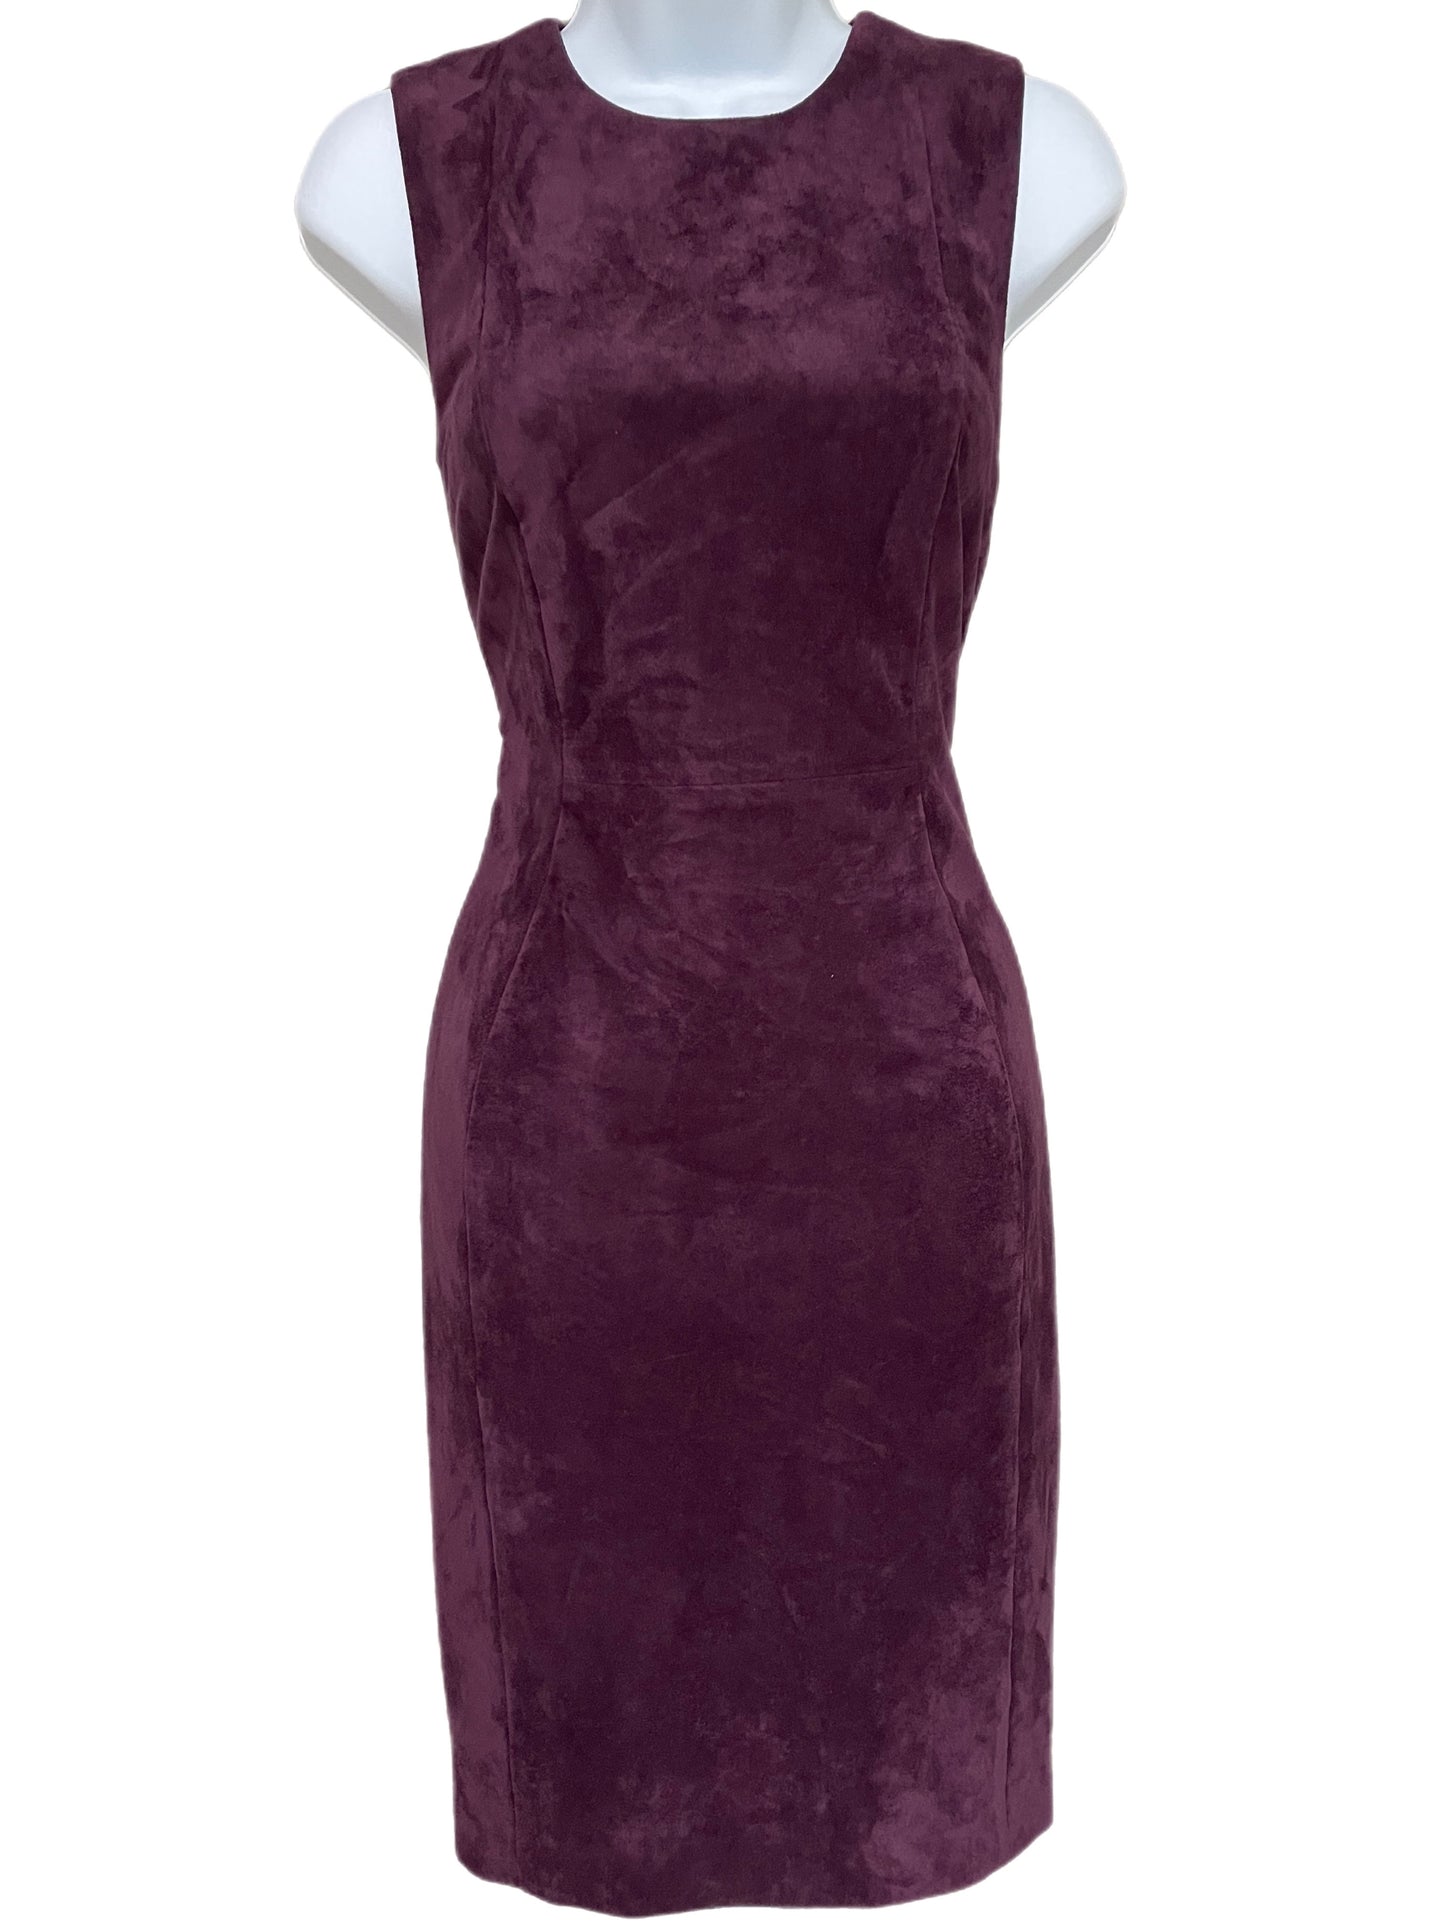 Dress-Pencil Design-Purple Suede Fabric By Calvin Klein